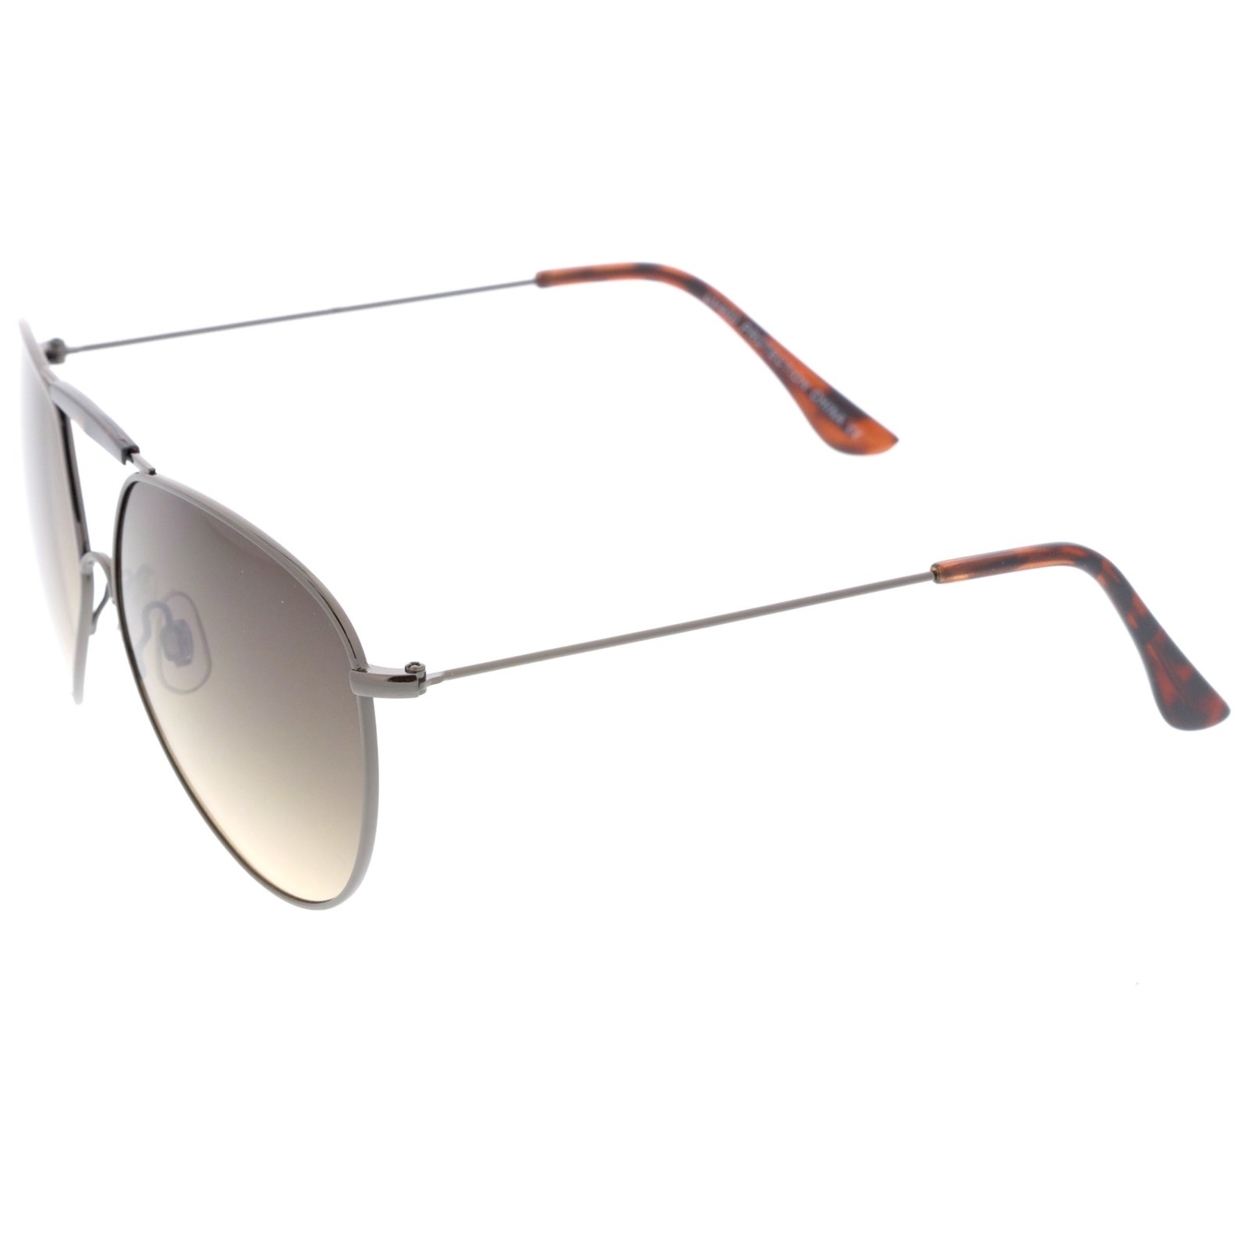 Casual Brow Bar Detail Slim Temple Metal Frame Aviator Sunglasses 62mm - Gold-Tortoise / Green